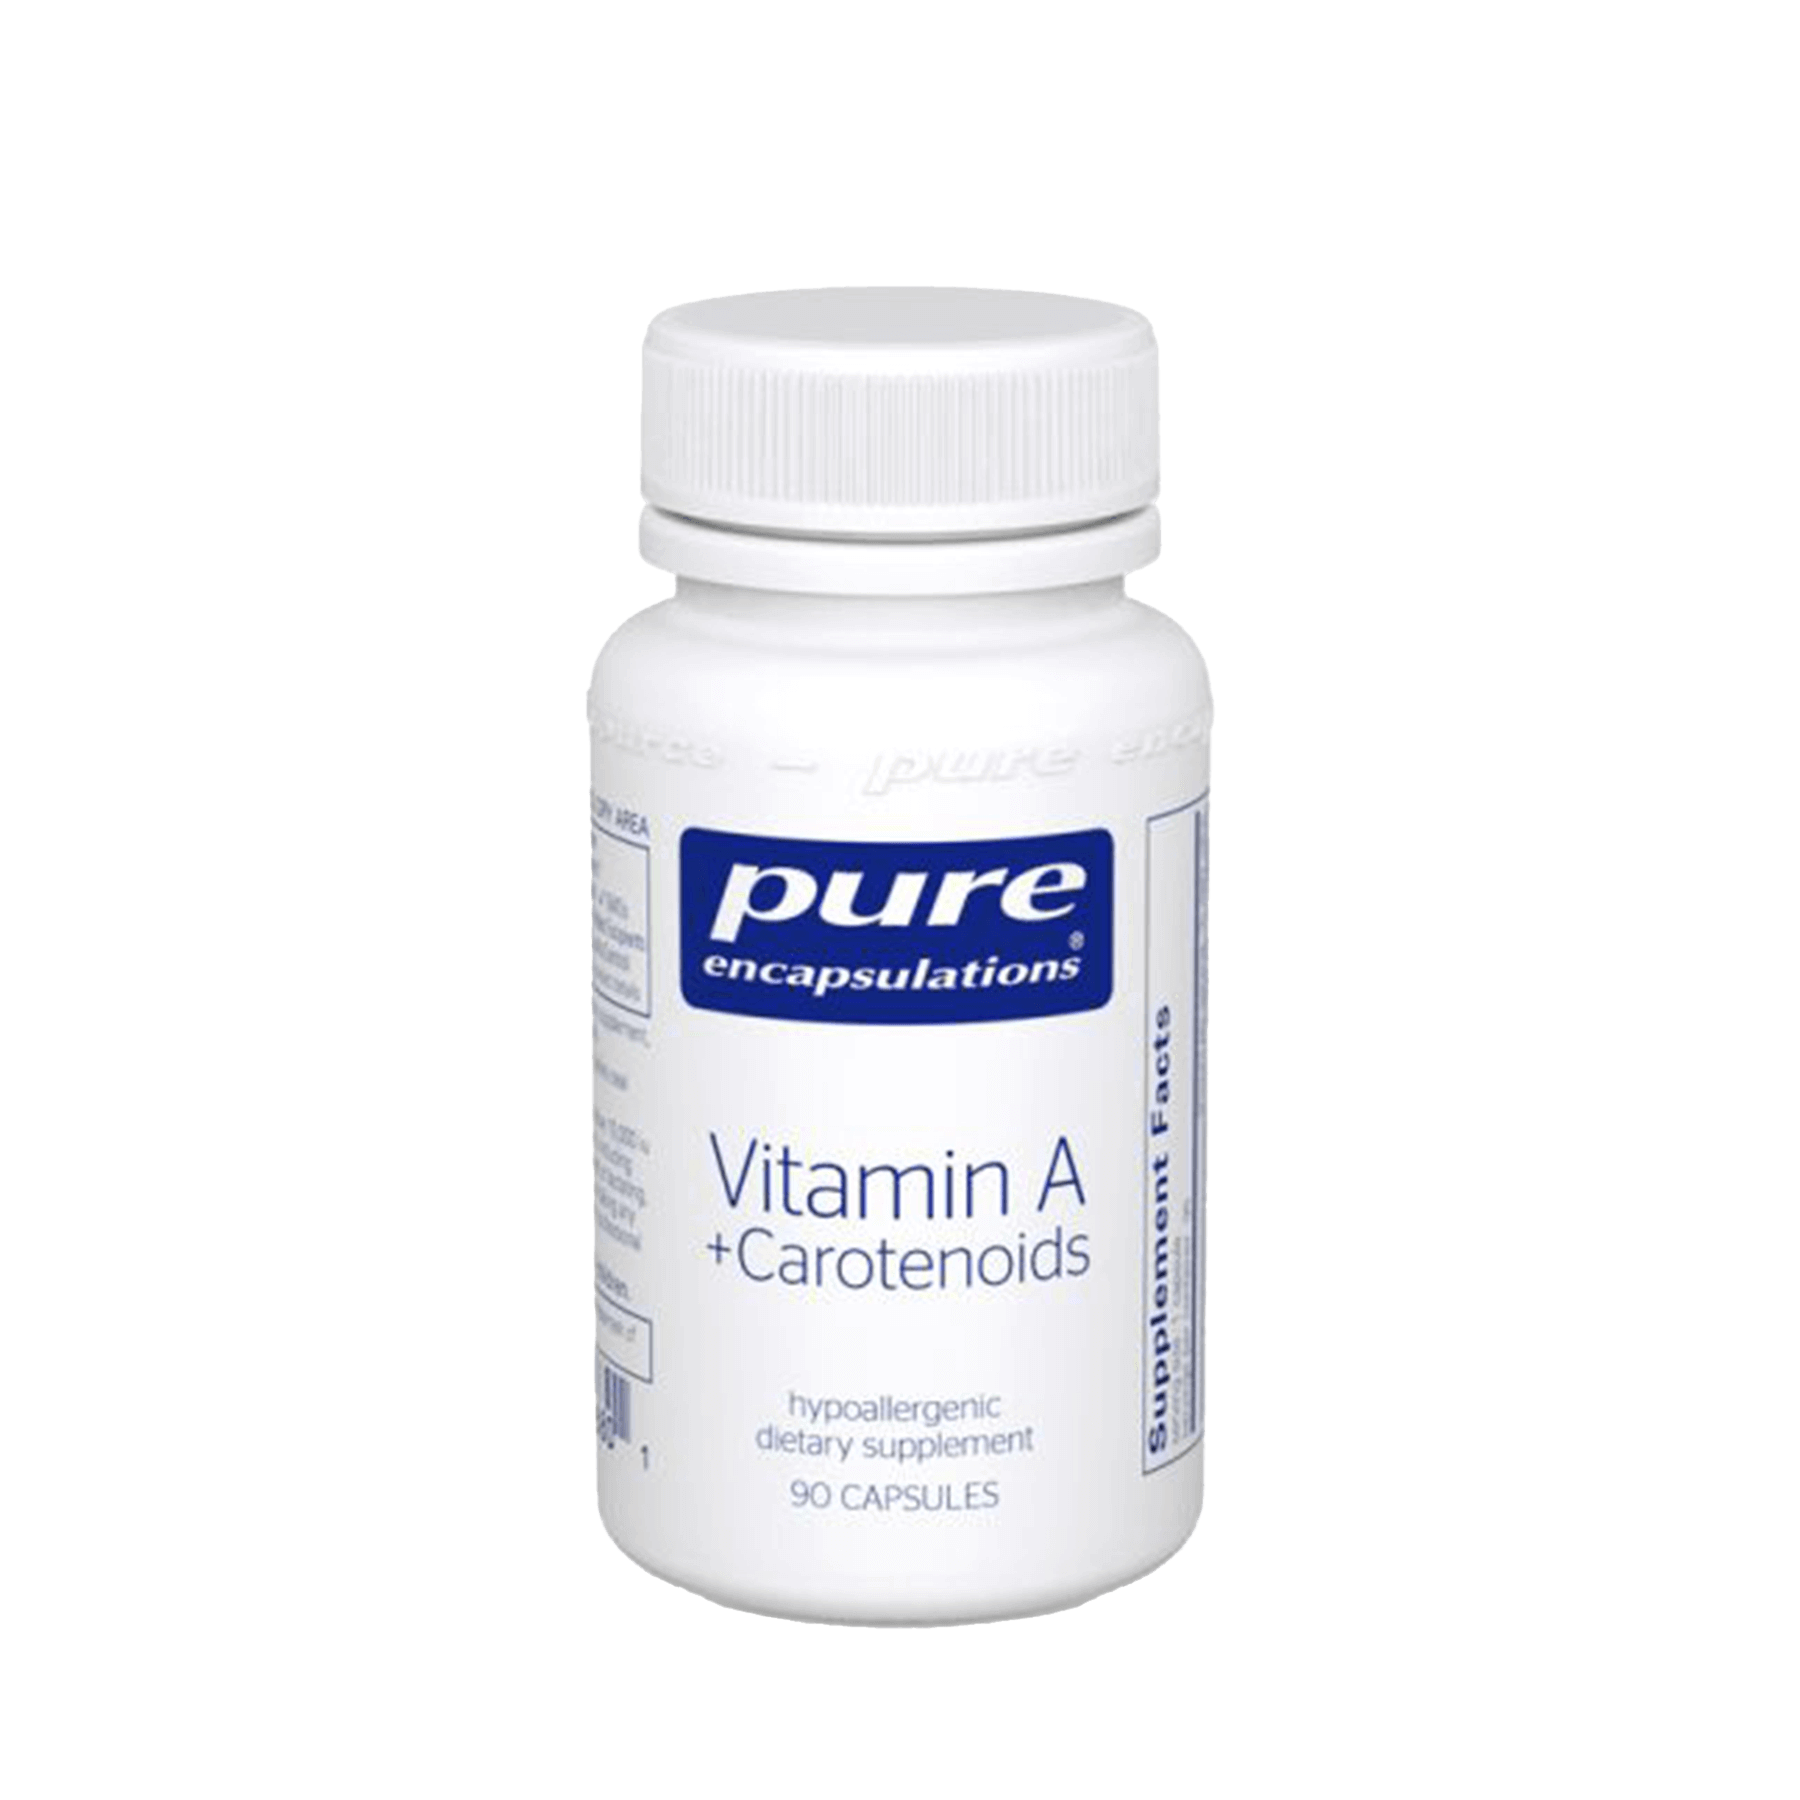 Pure Encapsulations Vitamin A + Carotenoids Capsules